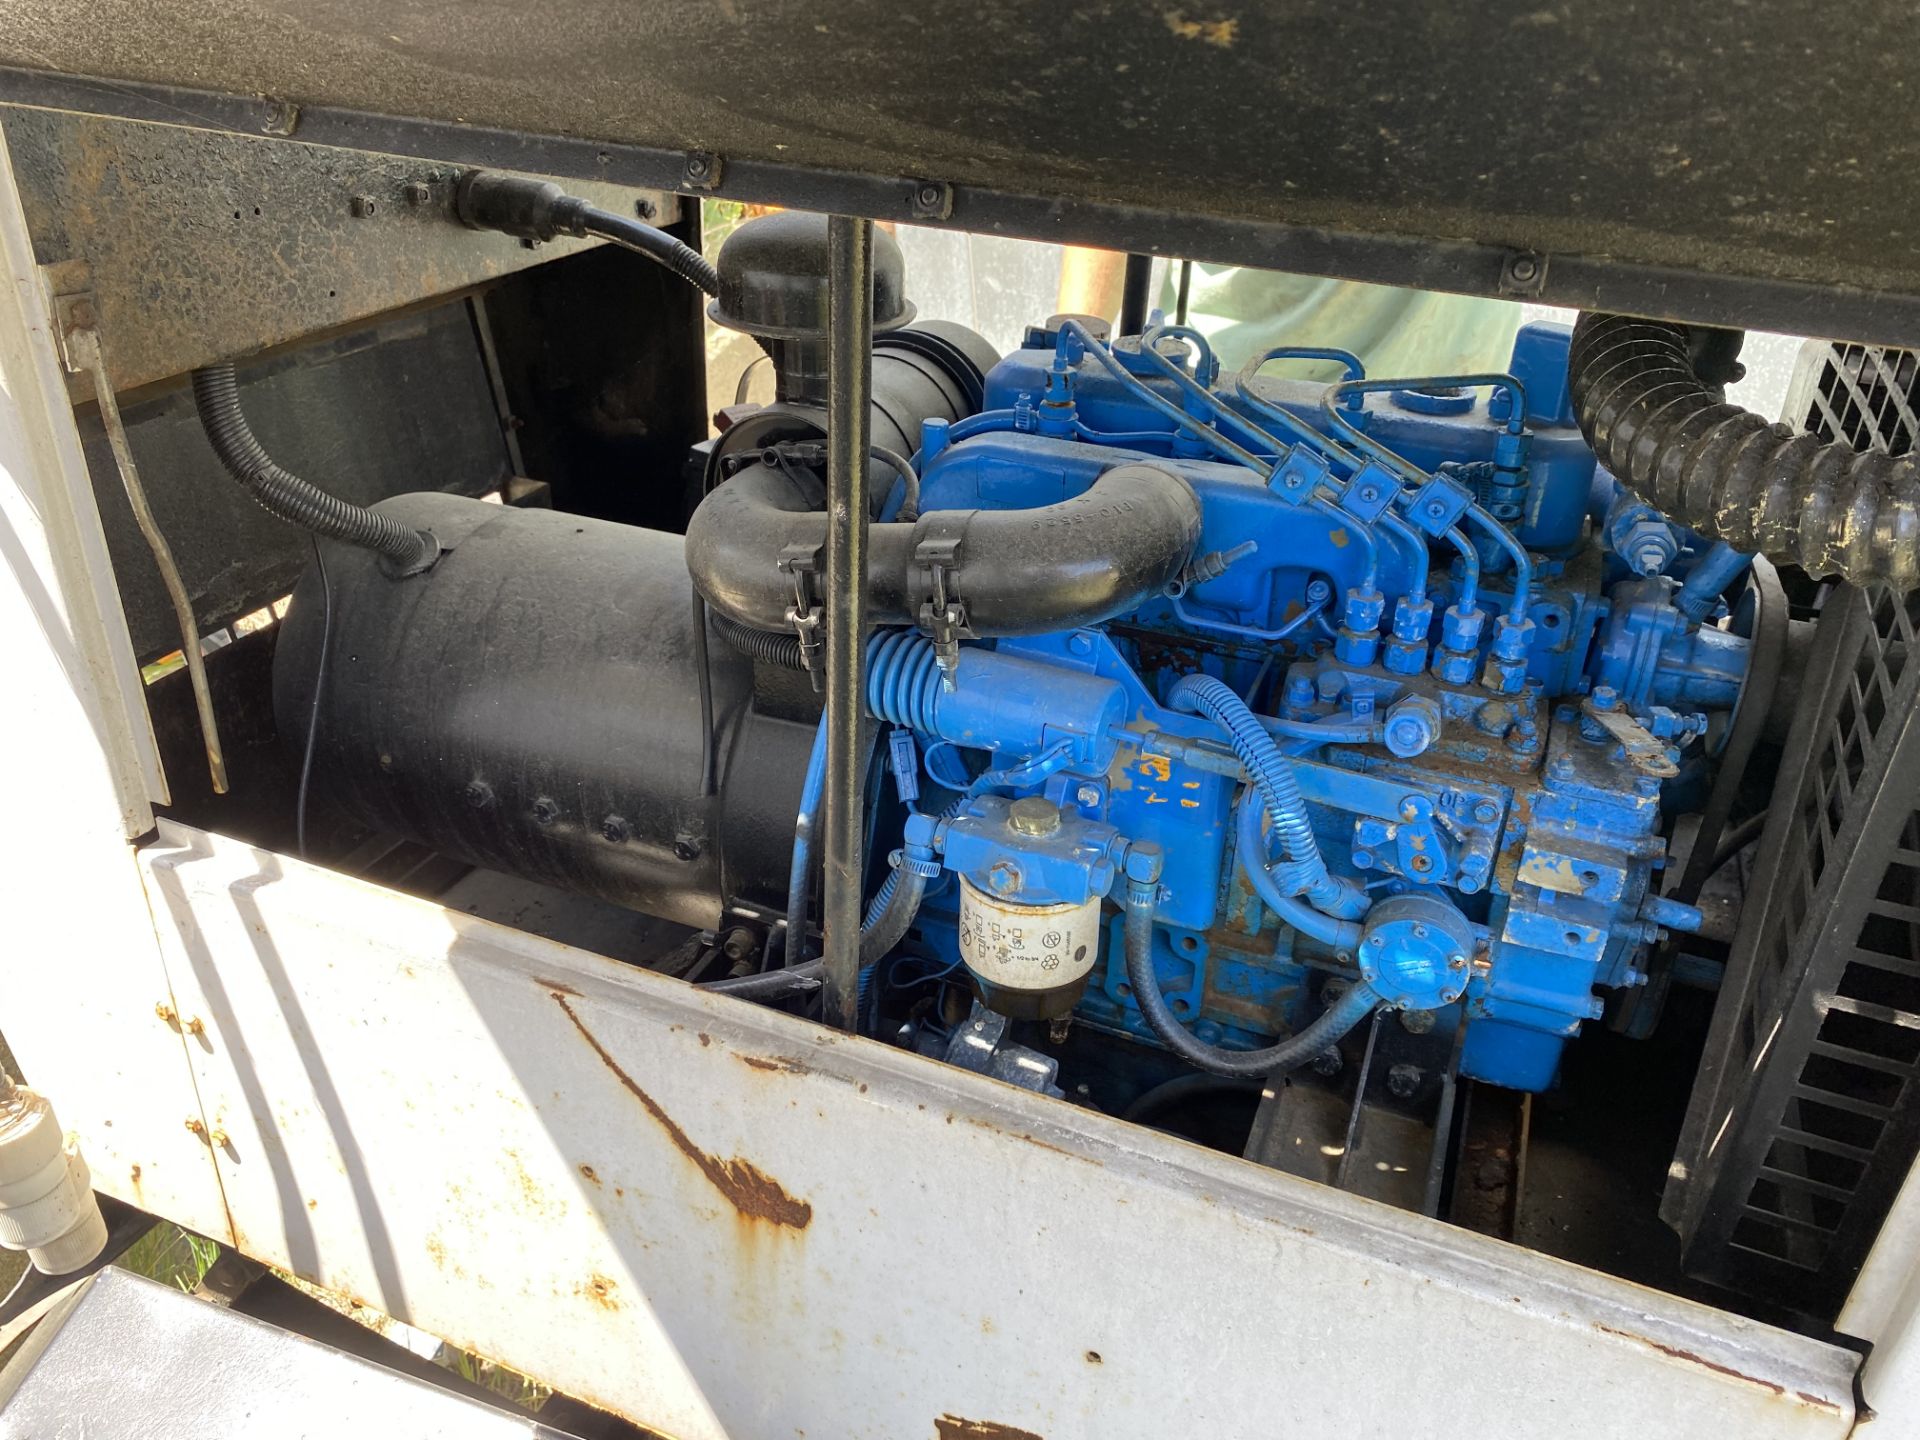 Isuzu Towable Generator, 4 Cylinder Diesel, Hrs: 7,713 - Image 4 of 4